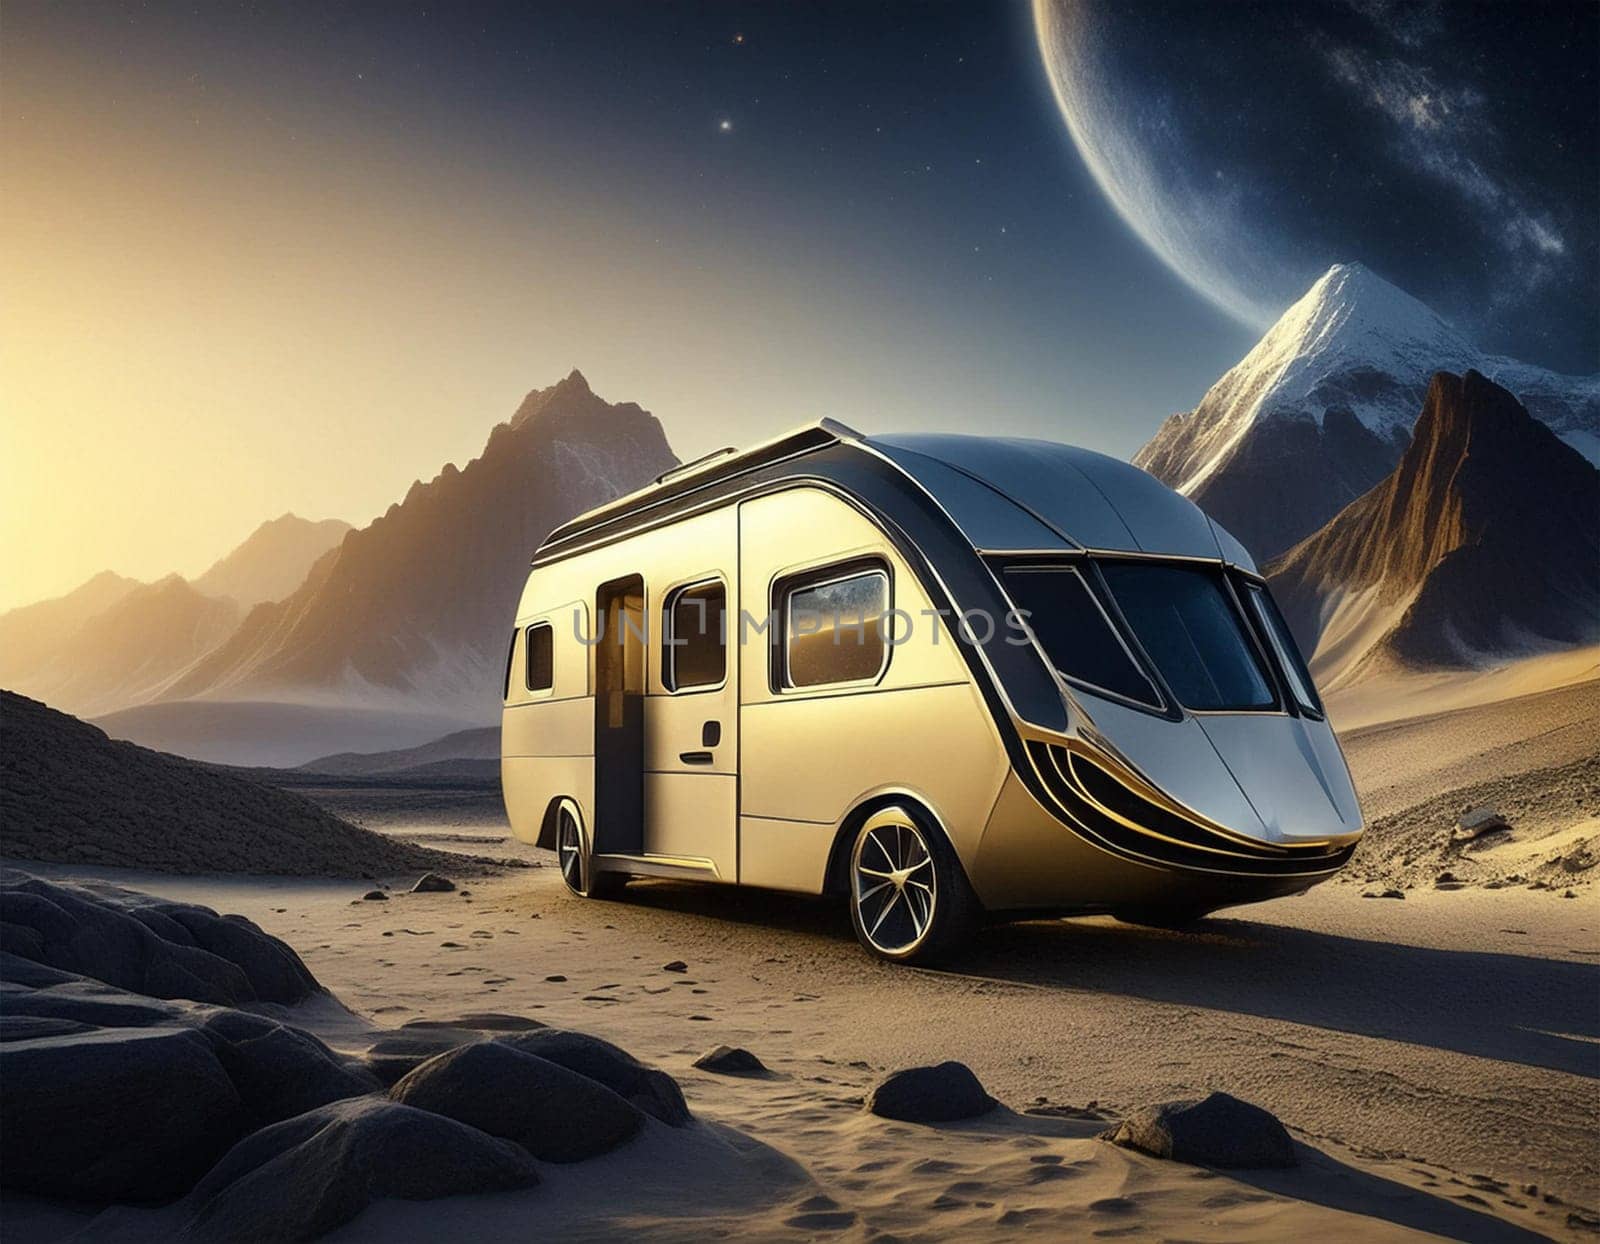 A robust, futuristic off-road motorhome van by JFsPic